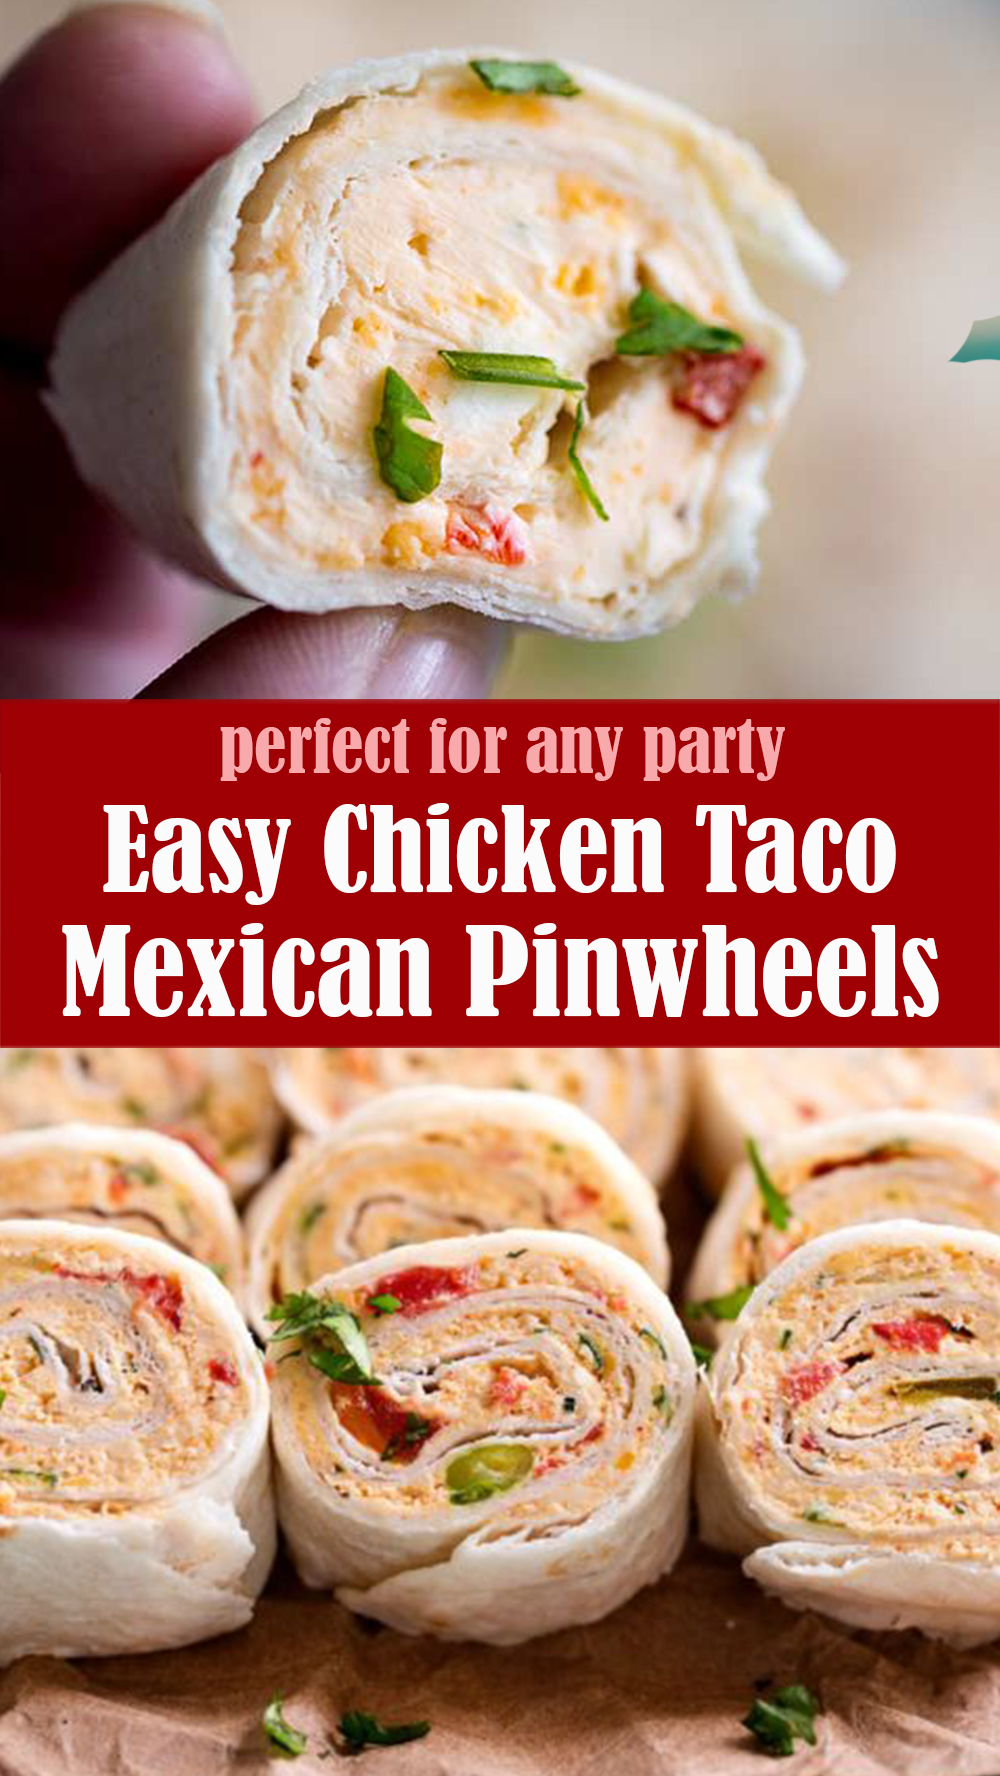 Easy Chicken Taco Mexican Pinwheels